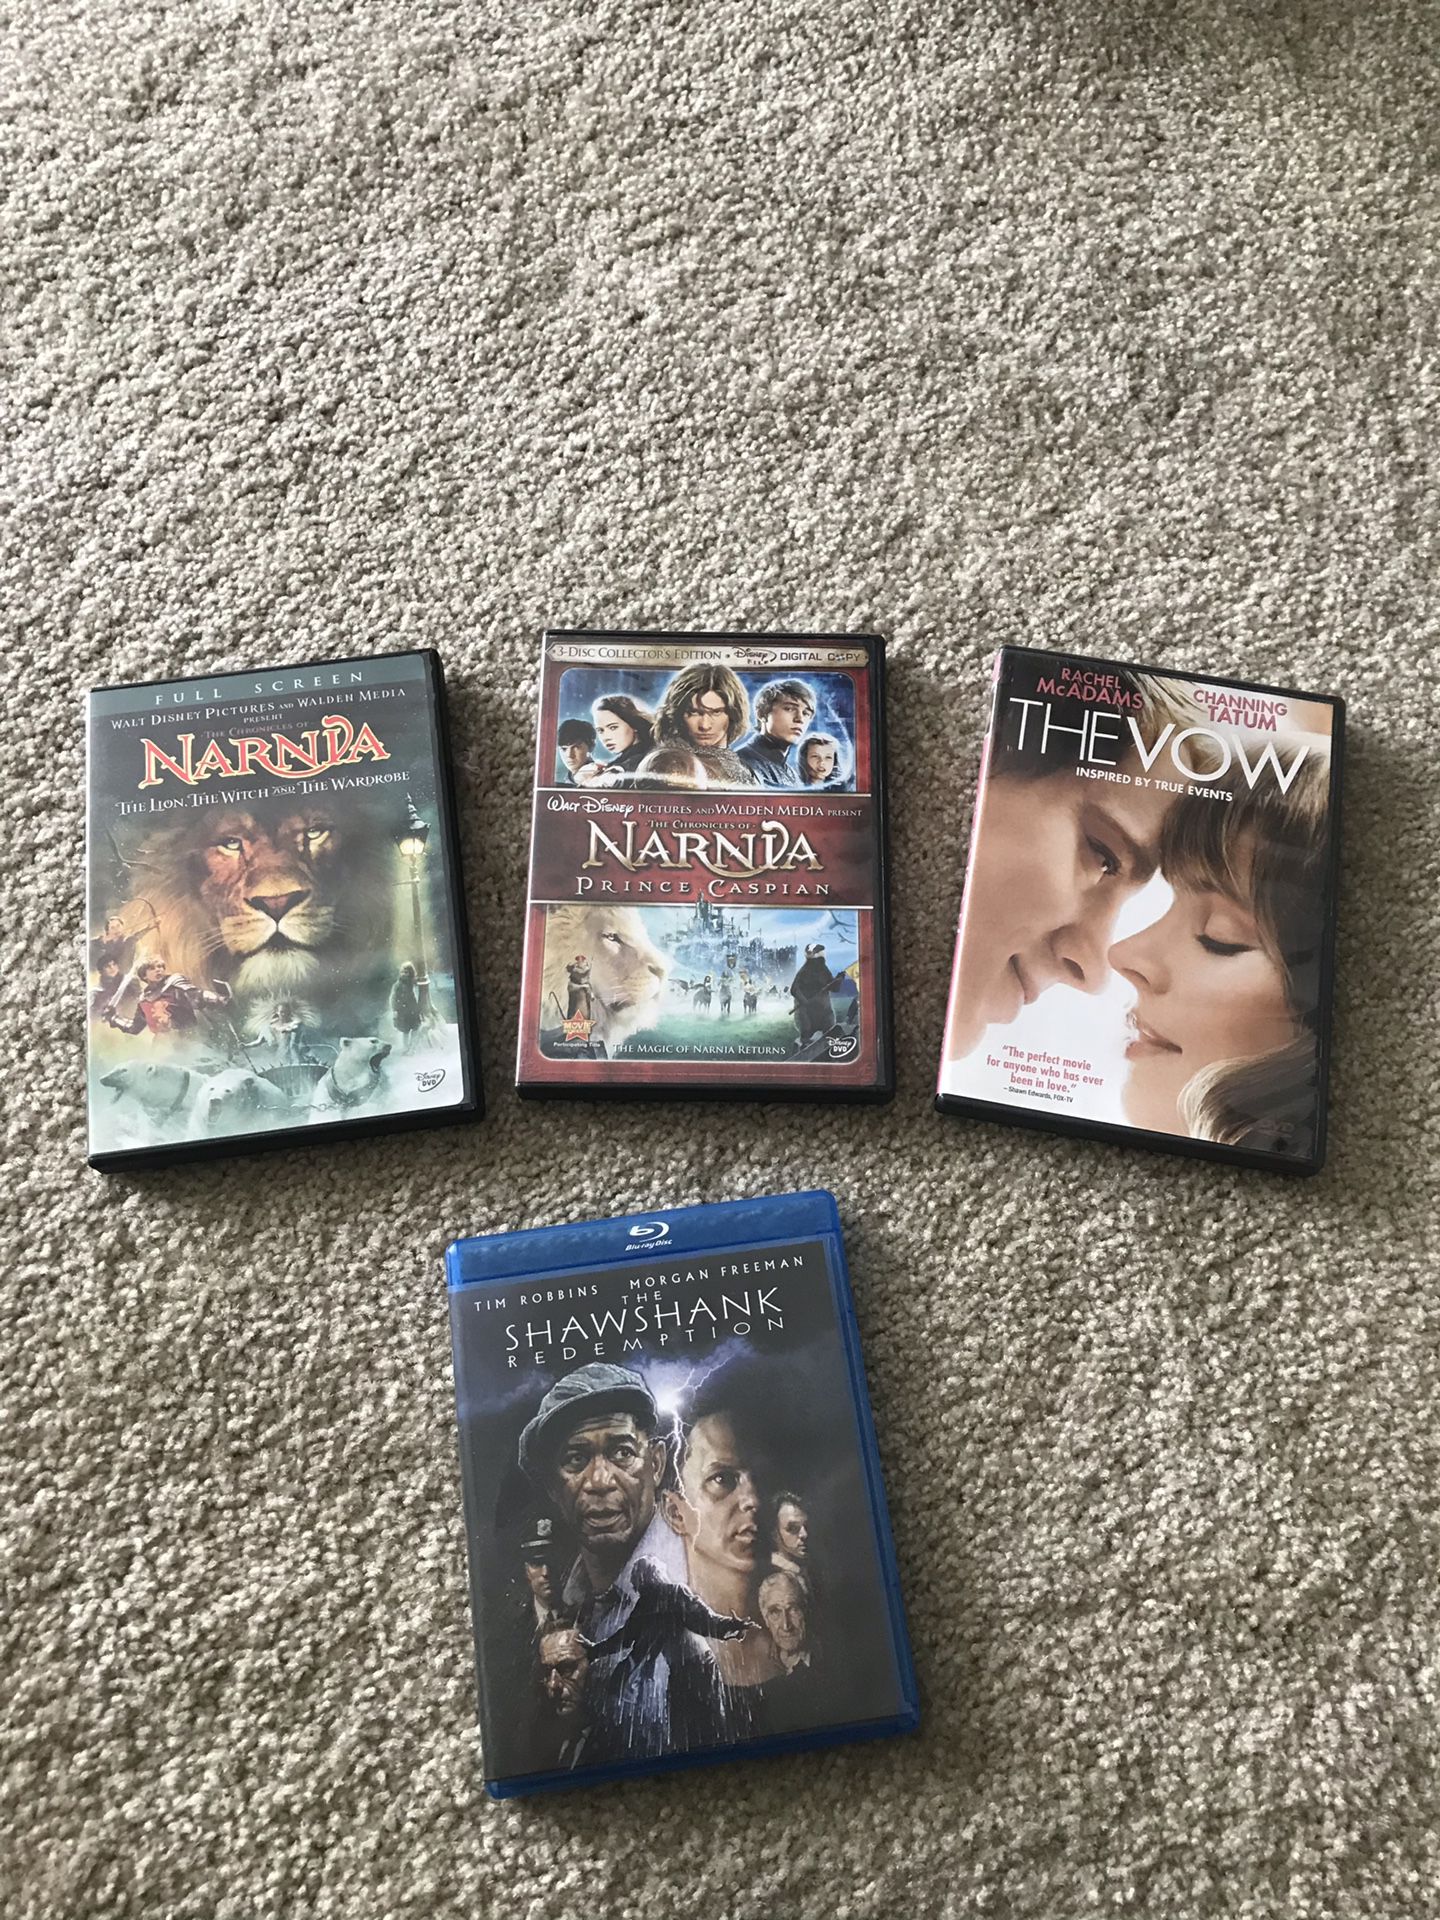 Select movies